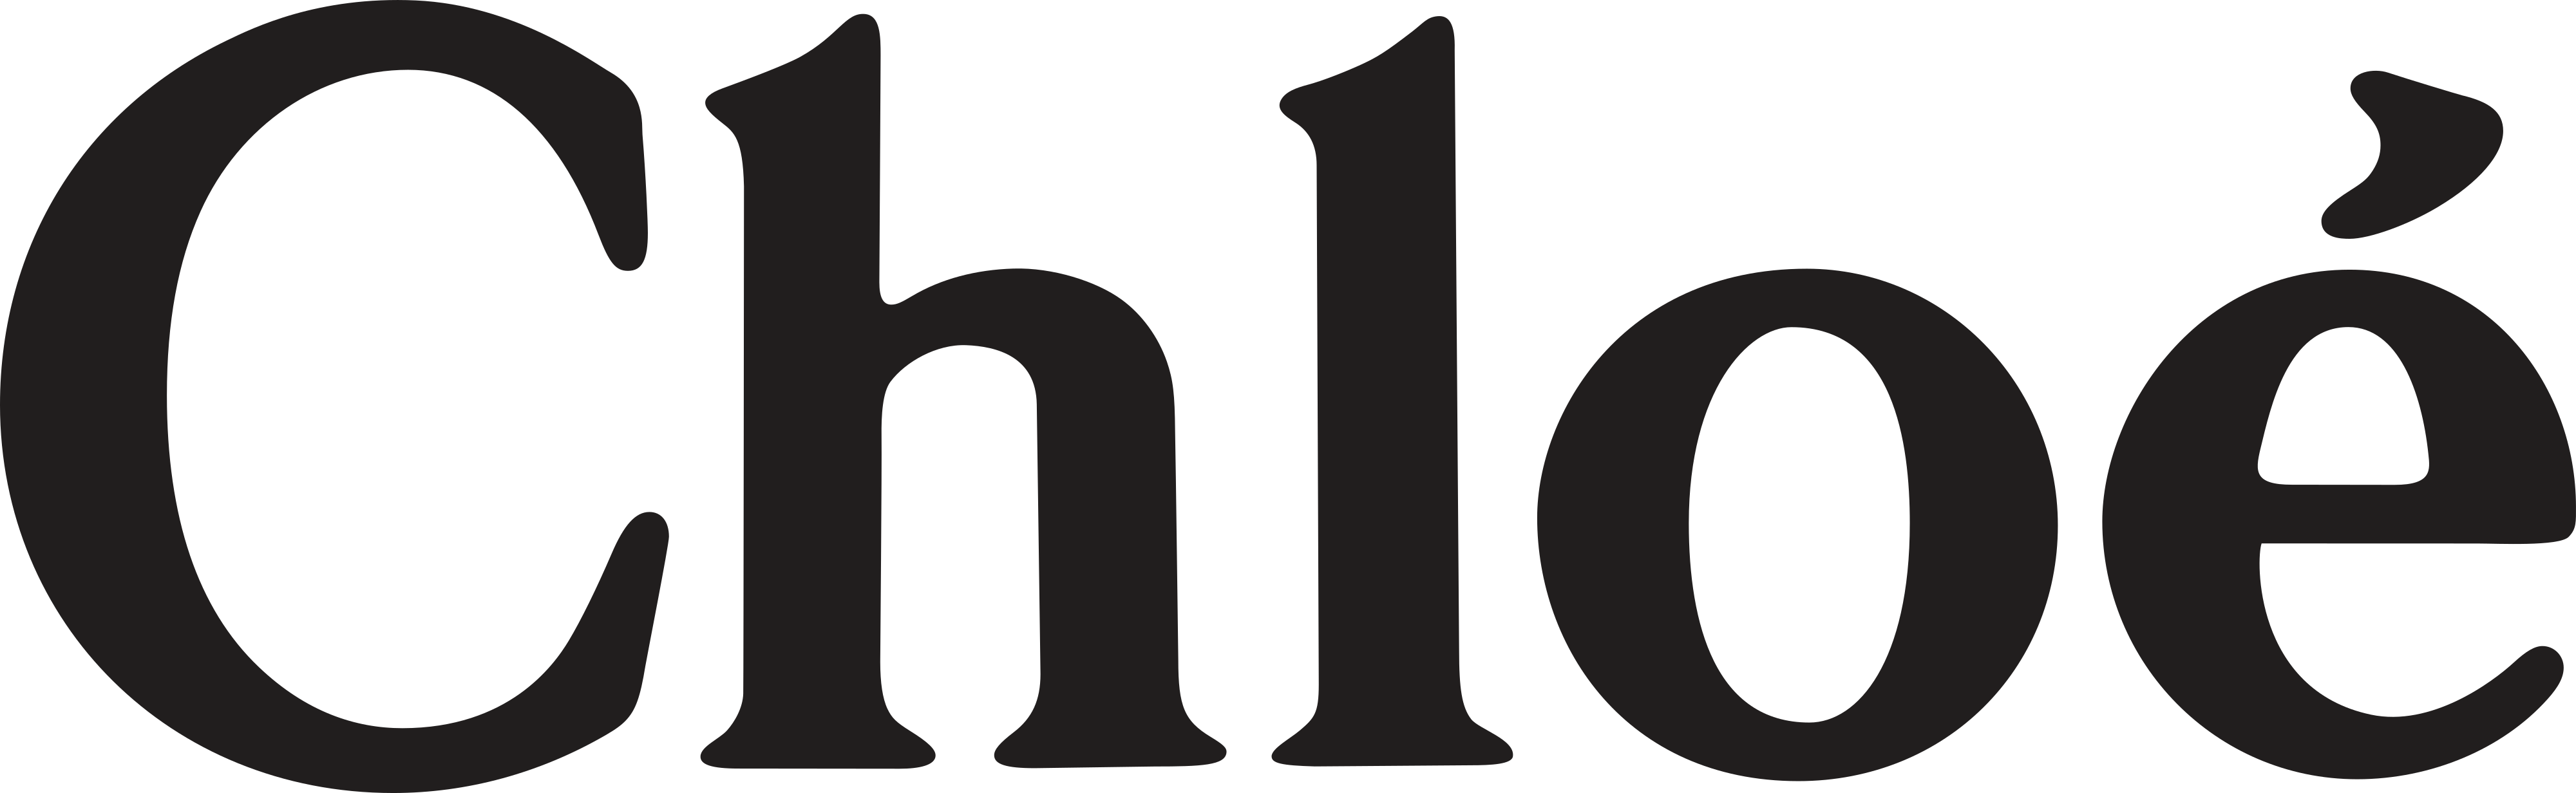 Chloe logo - download.